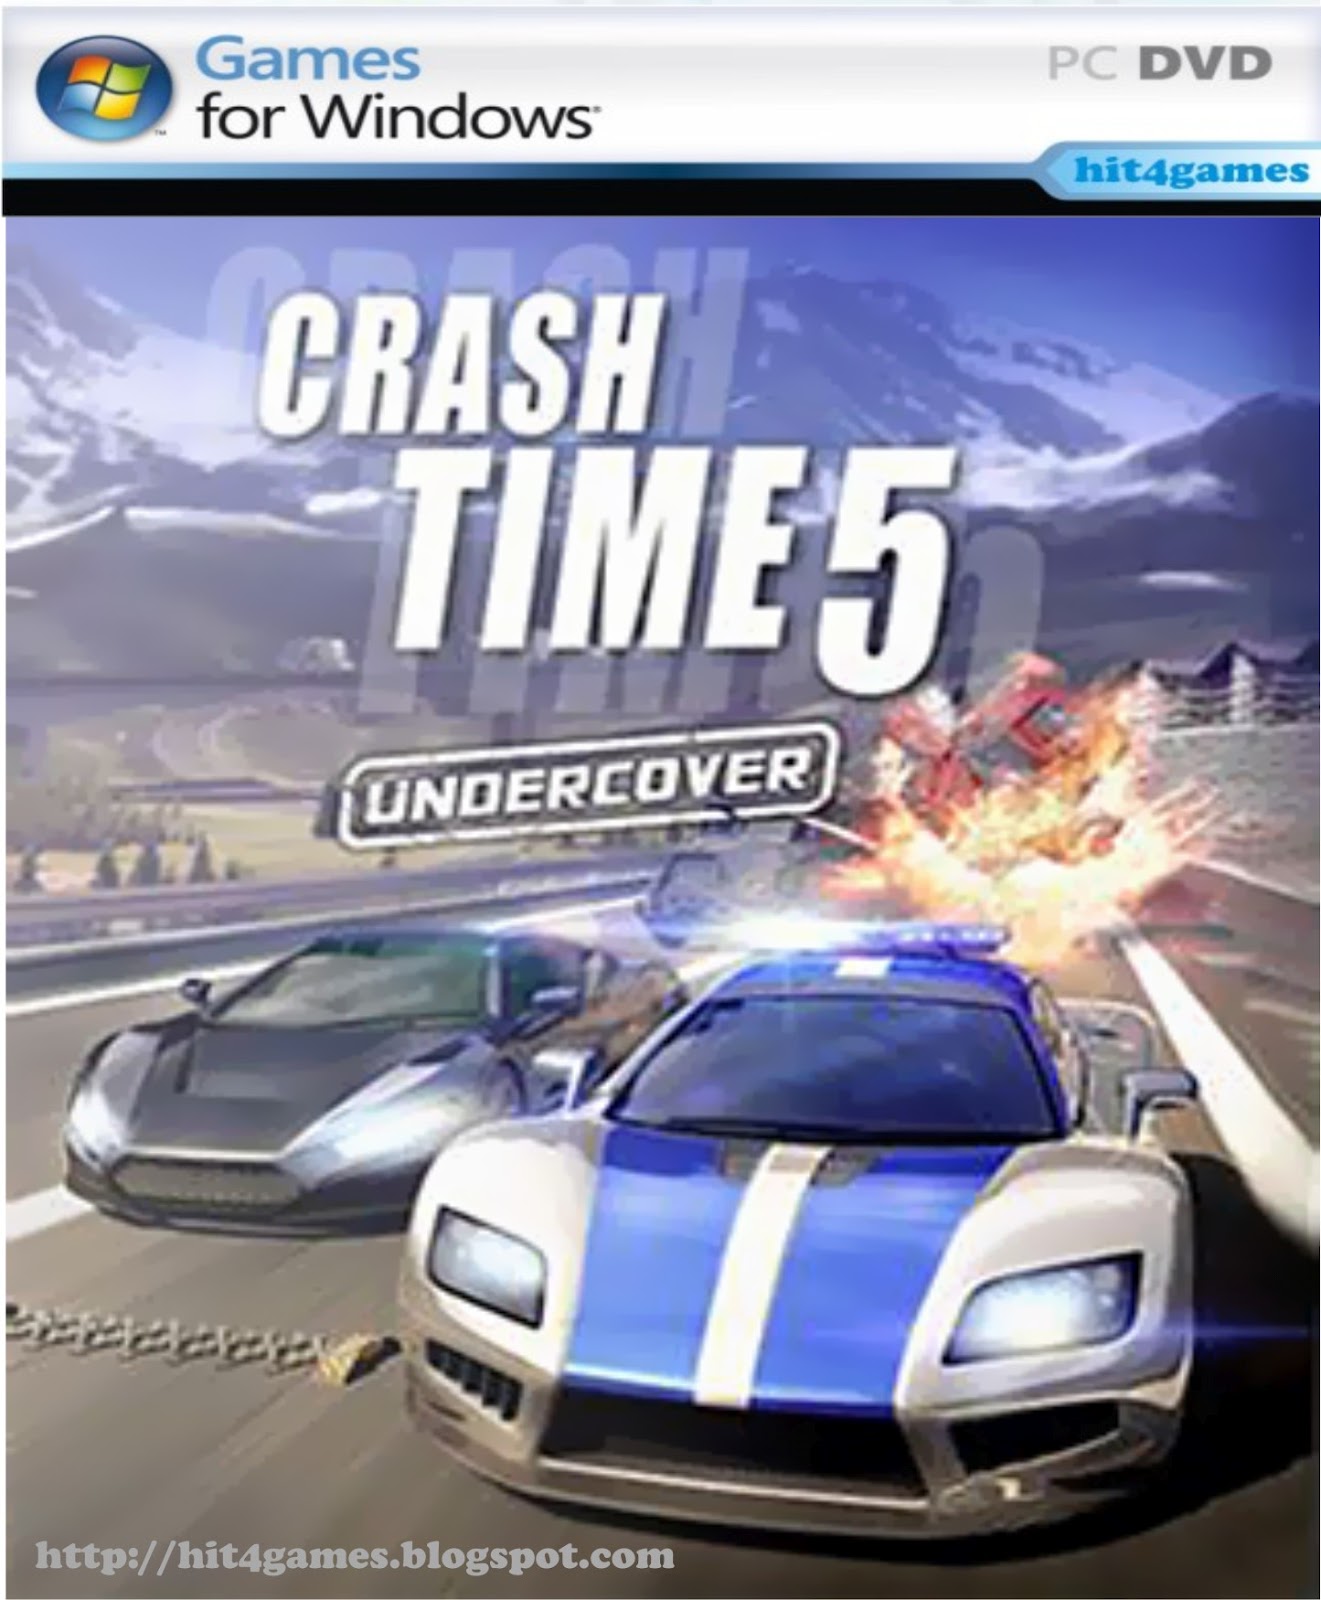 Crashtime+5+Undercover+%28pc+games%29-+hit4games+blogspot+com.jpg